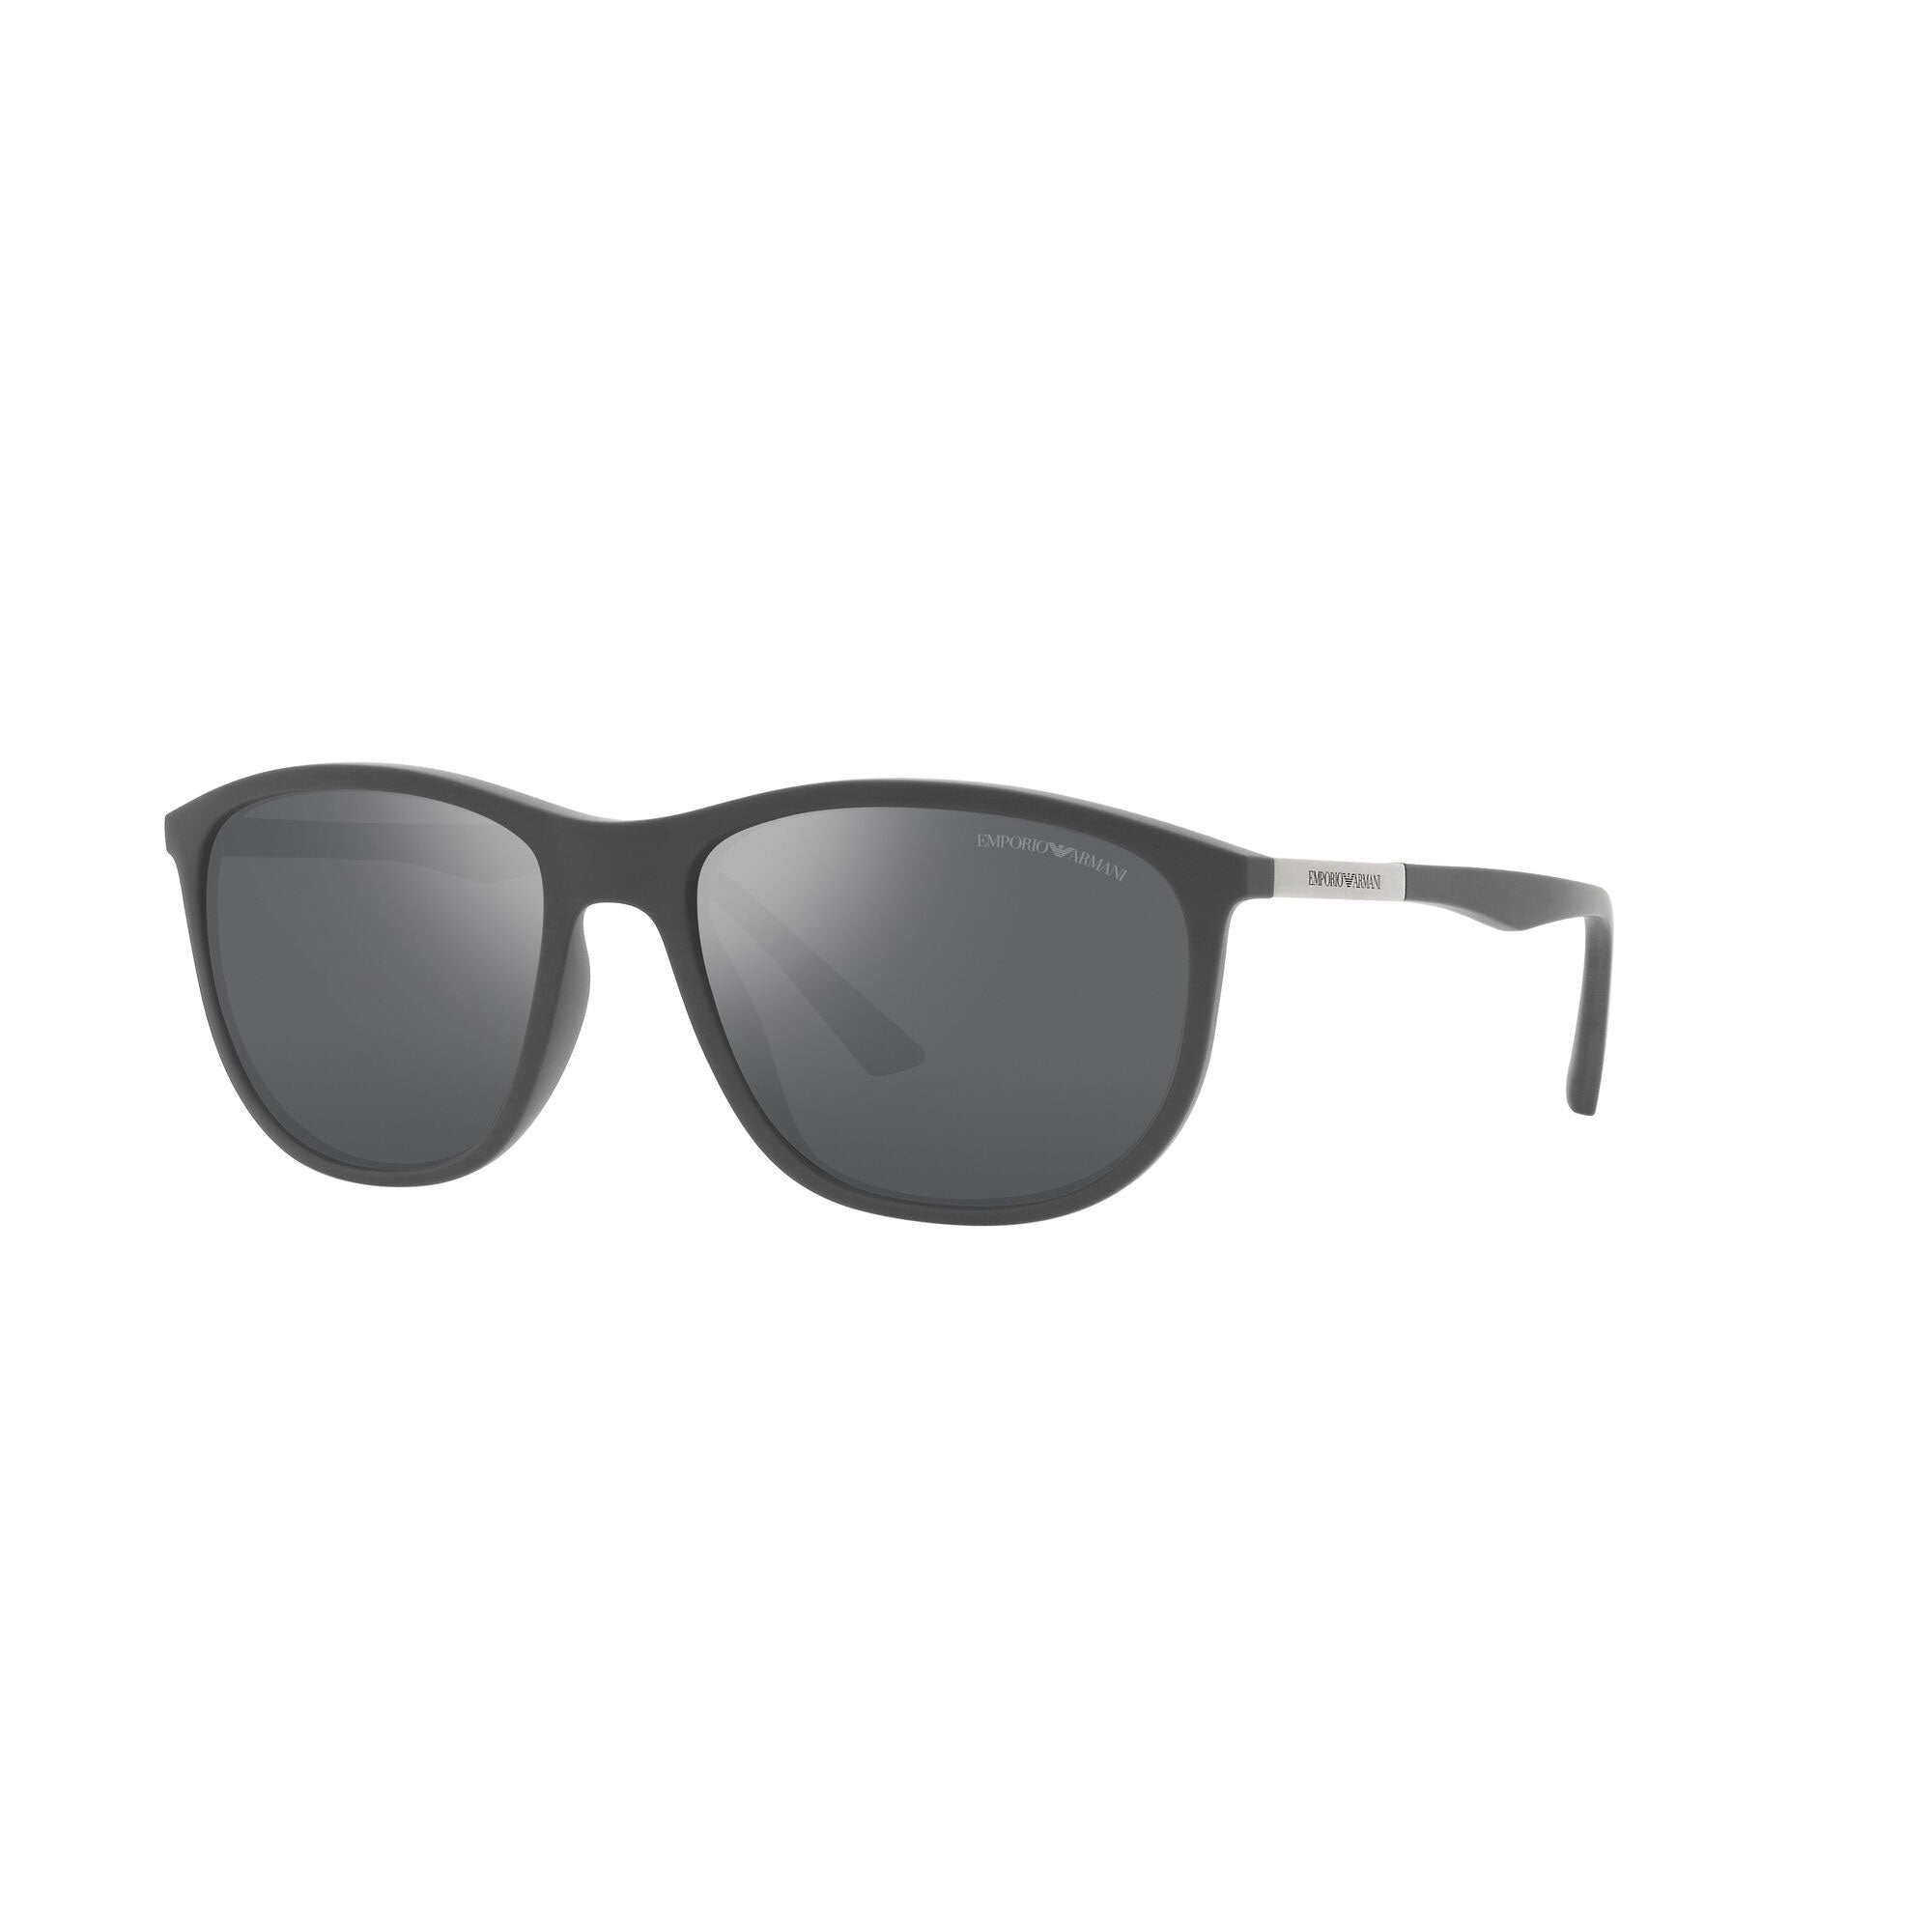 Emporio Armani Sunglasses Australia | 1001 Optometry